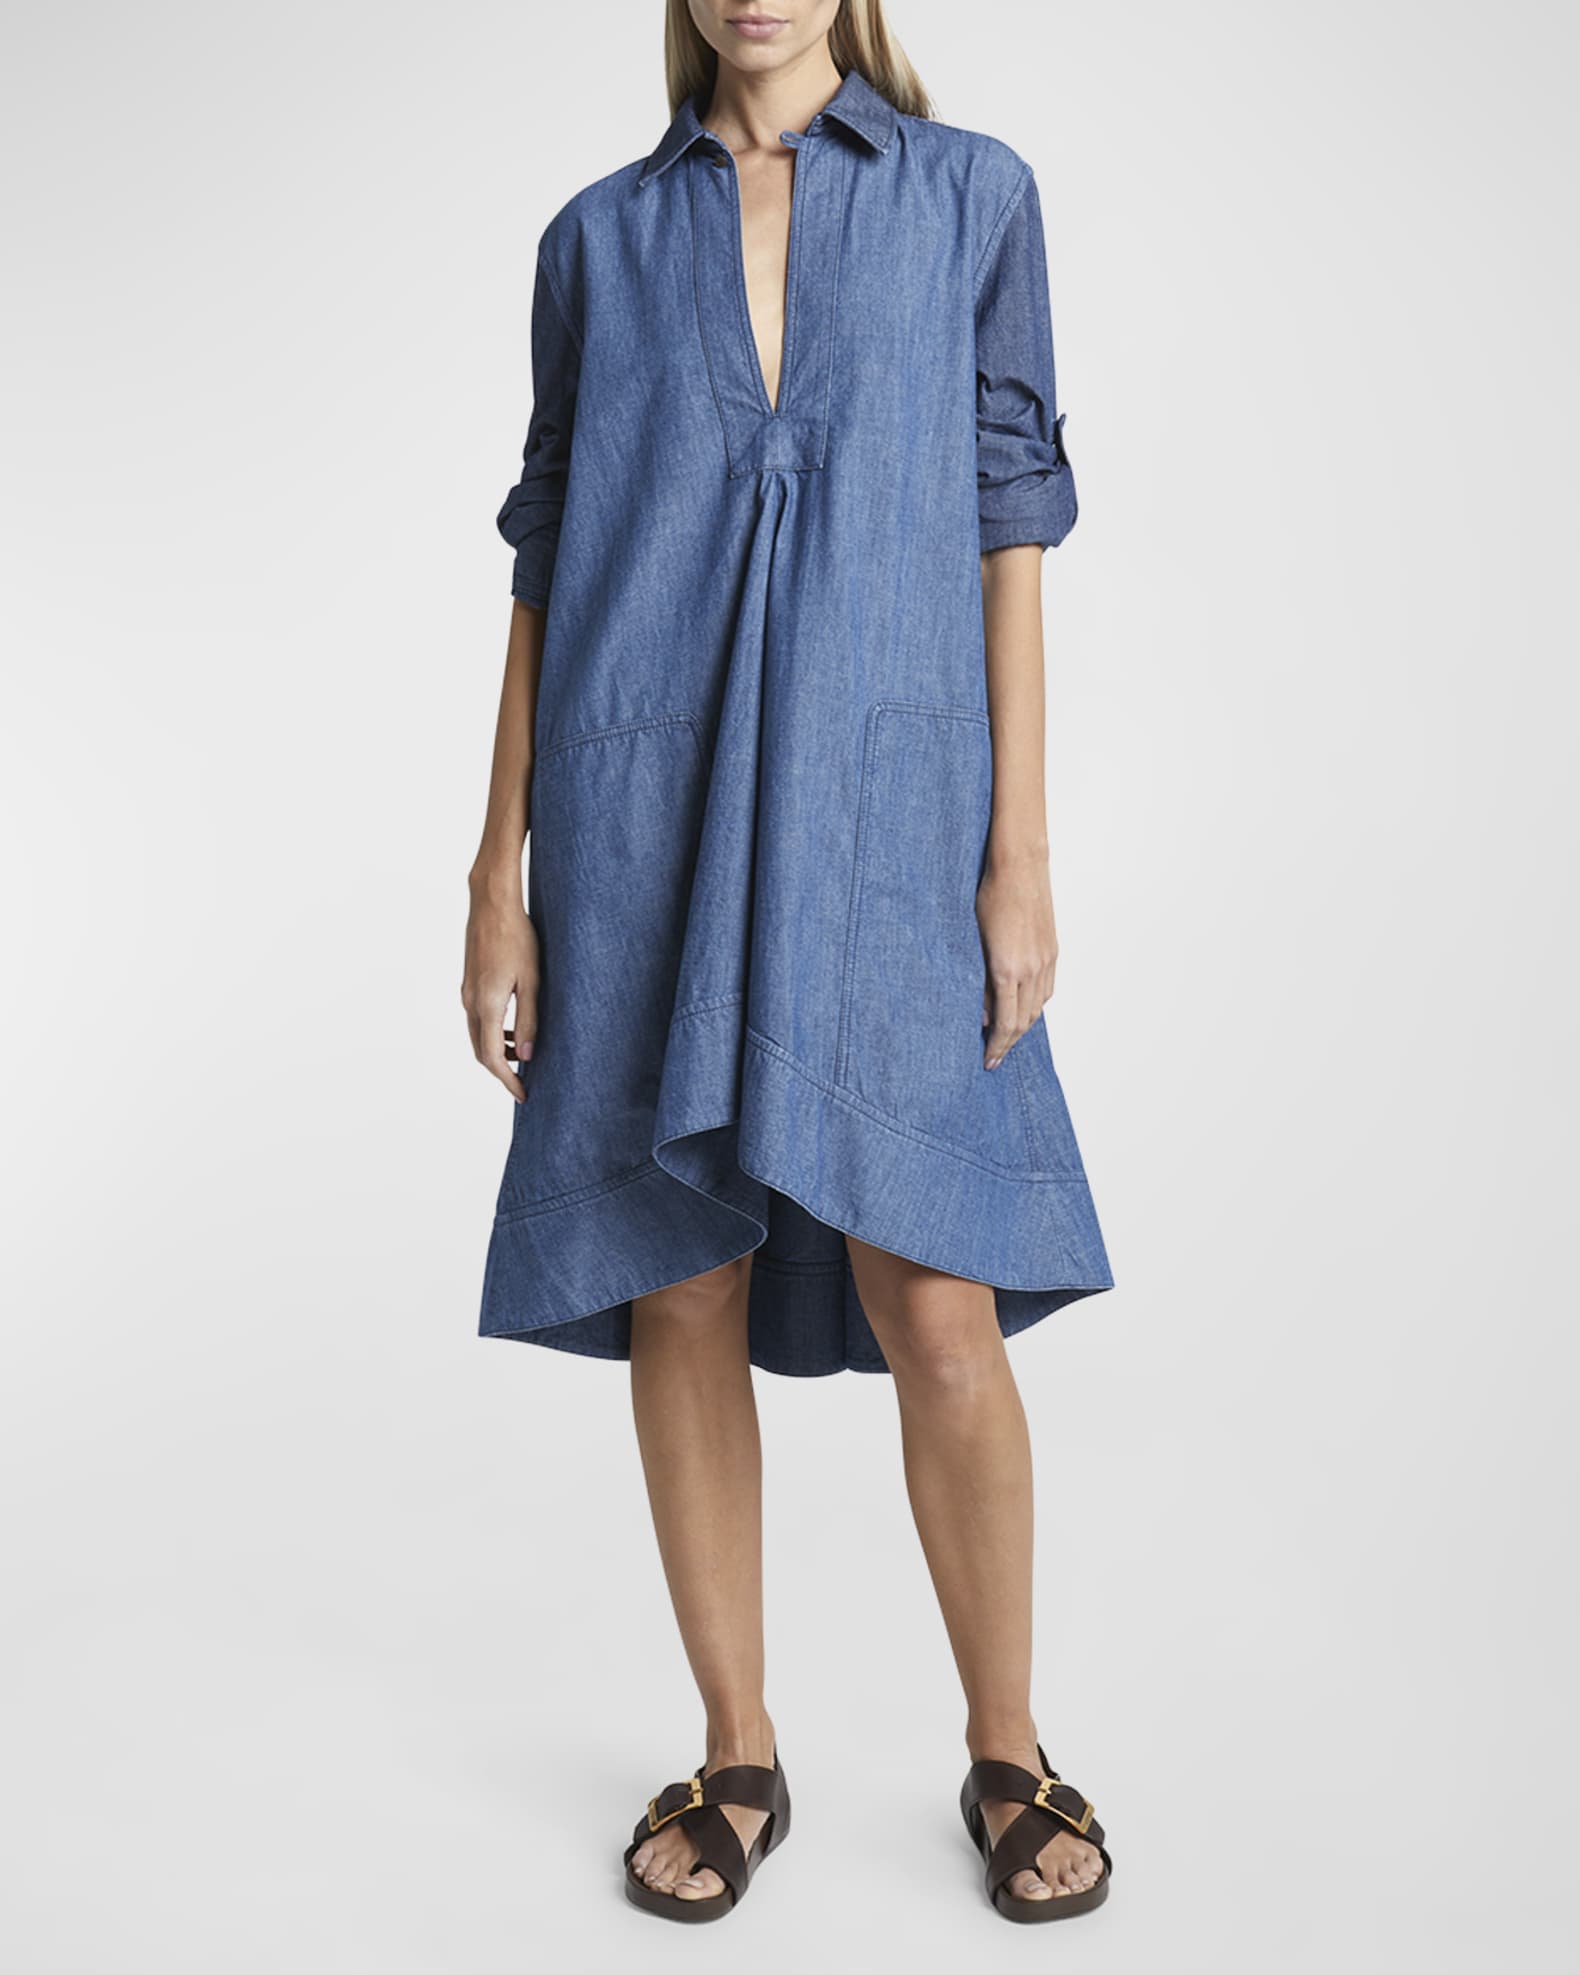 Loewe x Paula Ibiza Denim Wrap Tunic Dress with Rolled Cuff Sleeves |  Neiman Marcus